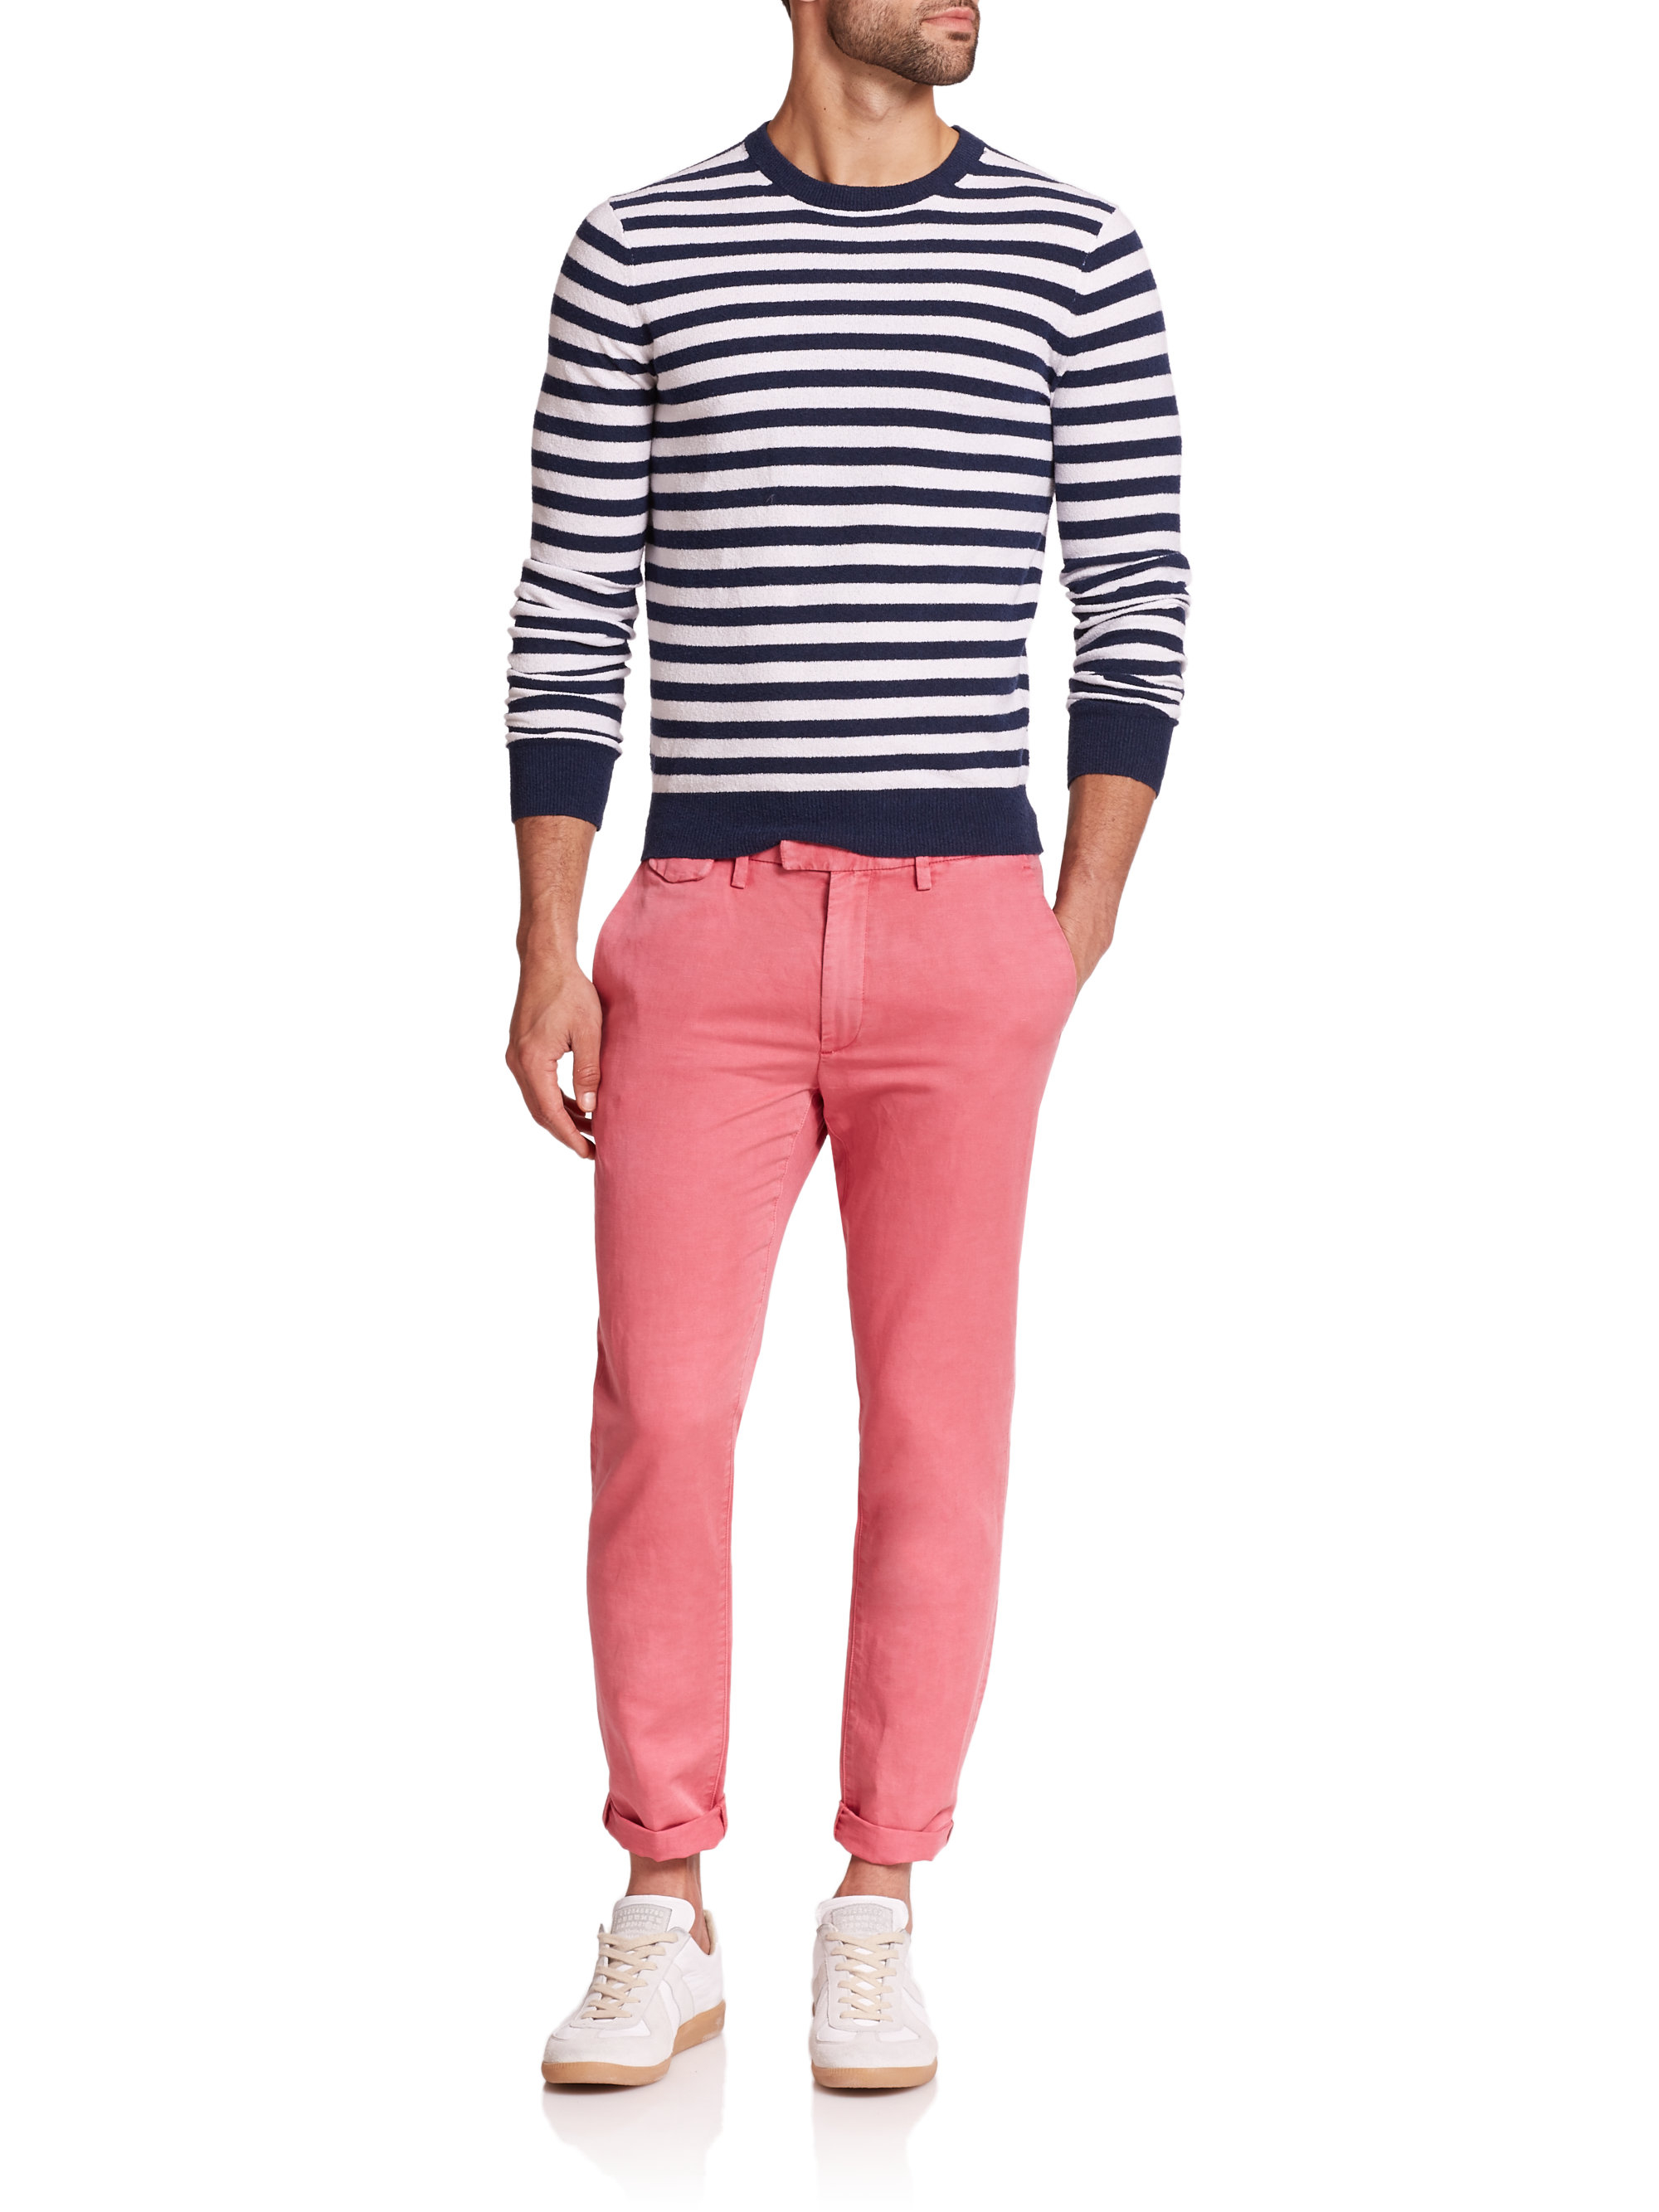 Michael Kors Cotton & Linen Slim-fit Pants in Coral (Pink) for Men - Lyst